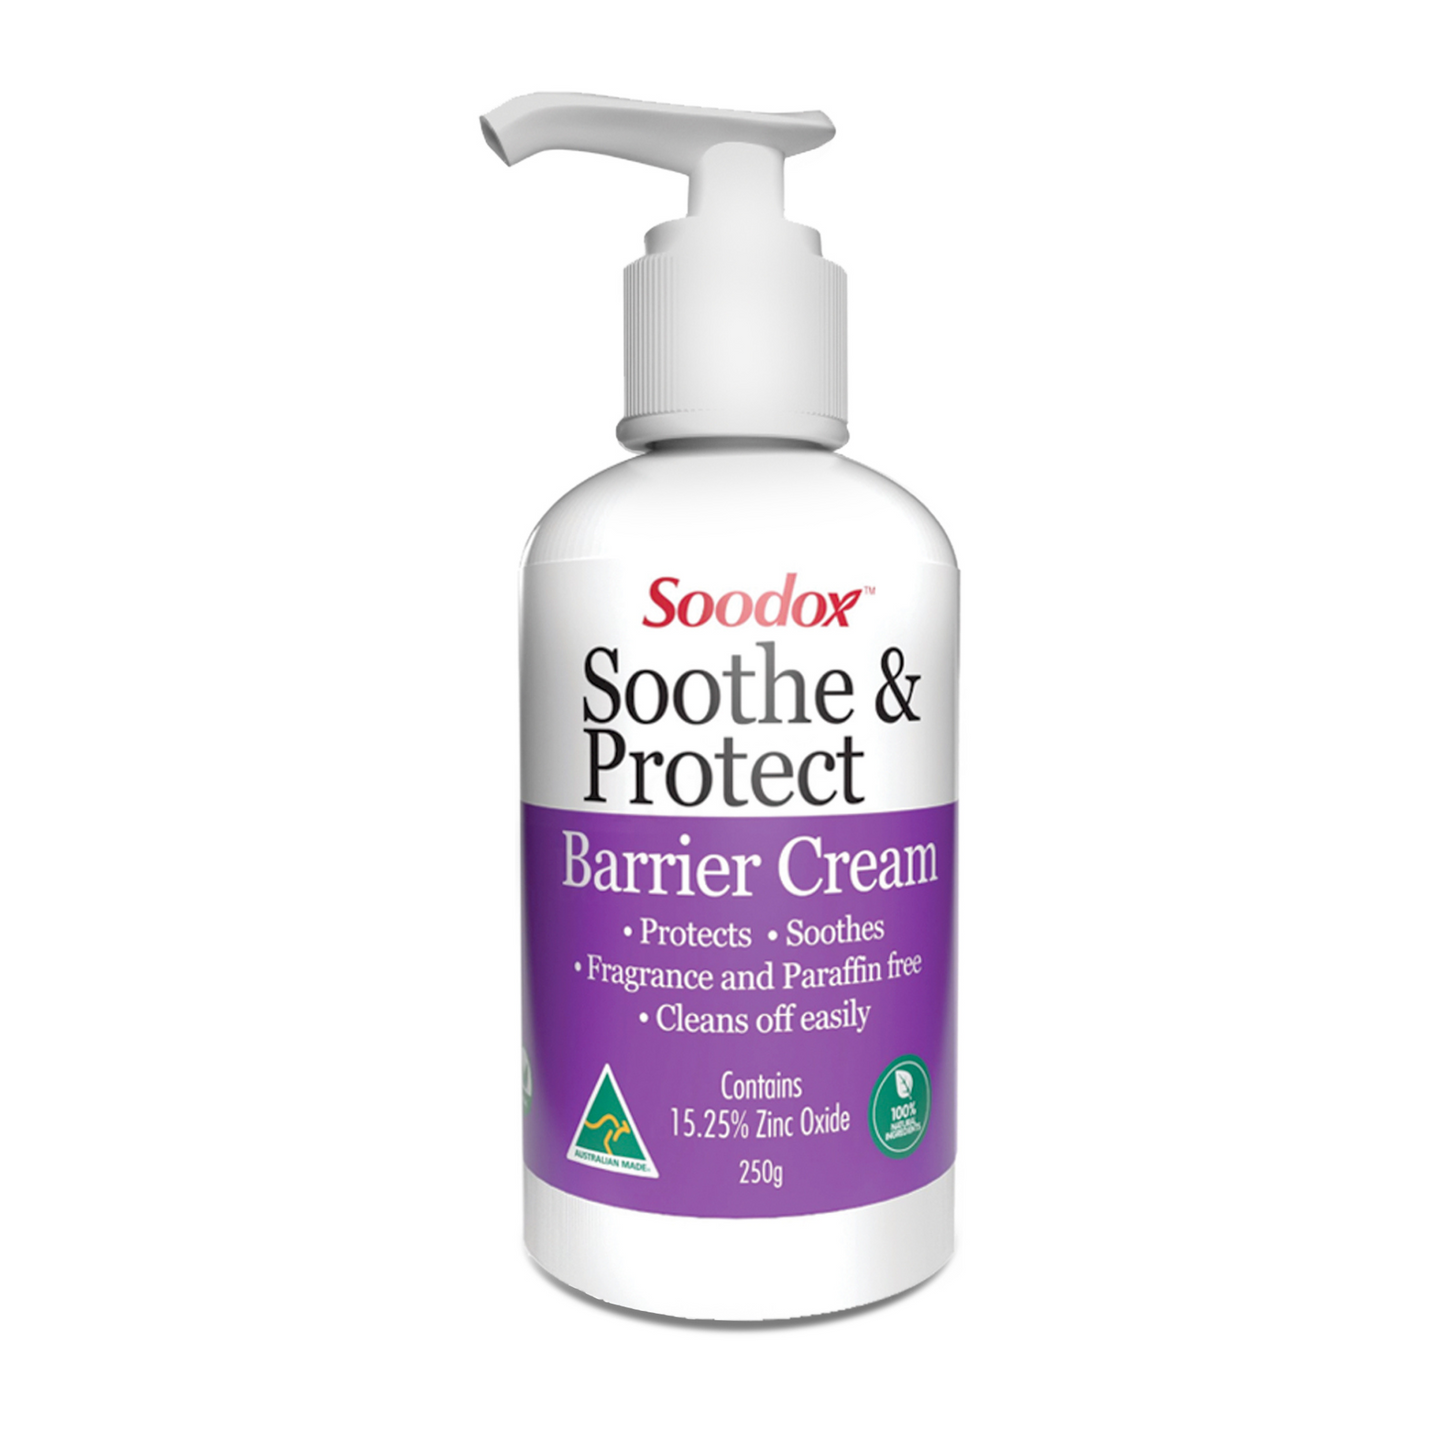 Soodox Soothe & Protect Barrier Cream 250g Pump - Carton (40 x 250g)